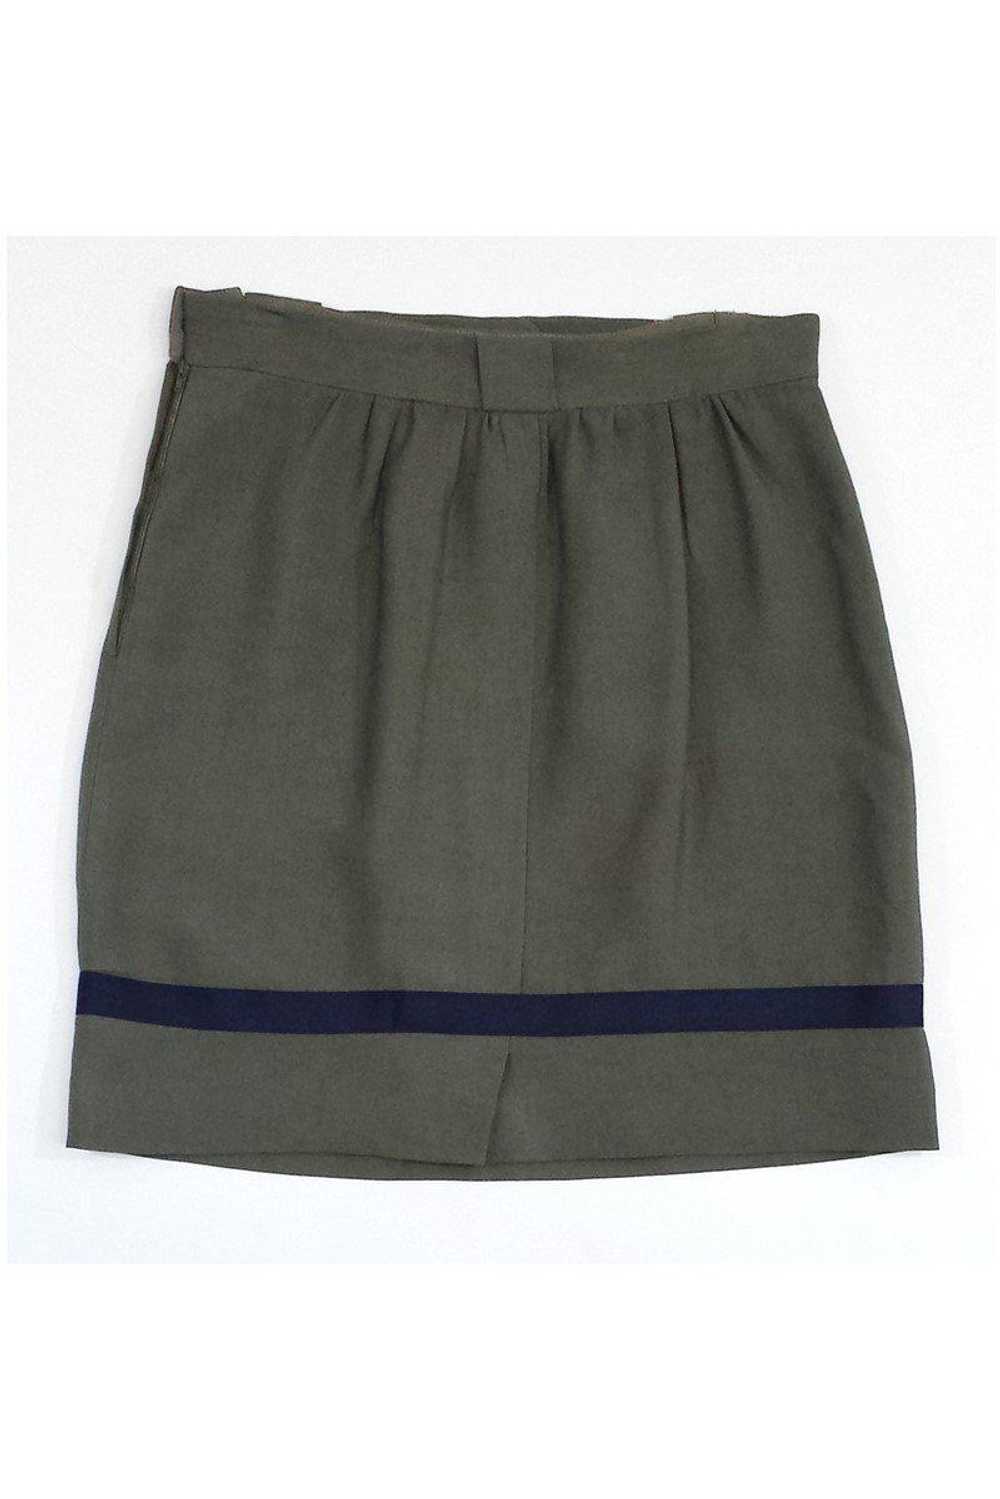 Giorgio Armani - Green Silk Blend Skirt Sz 8 - image 2